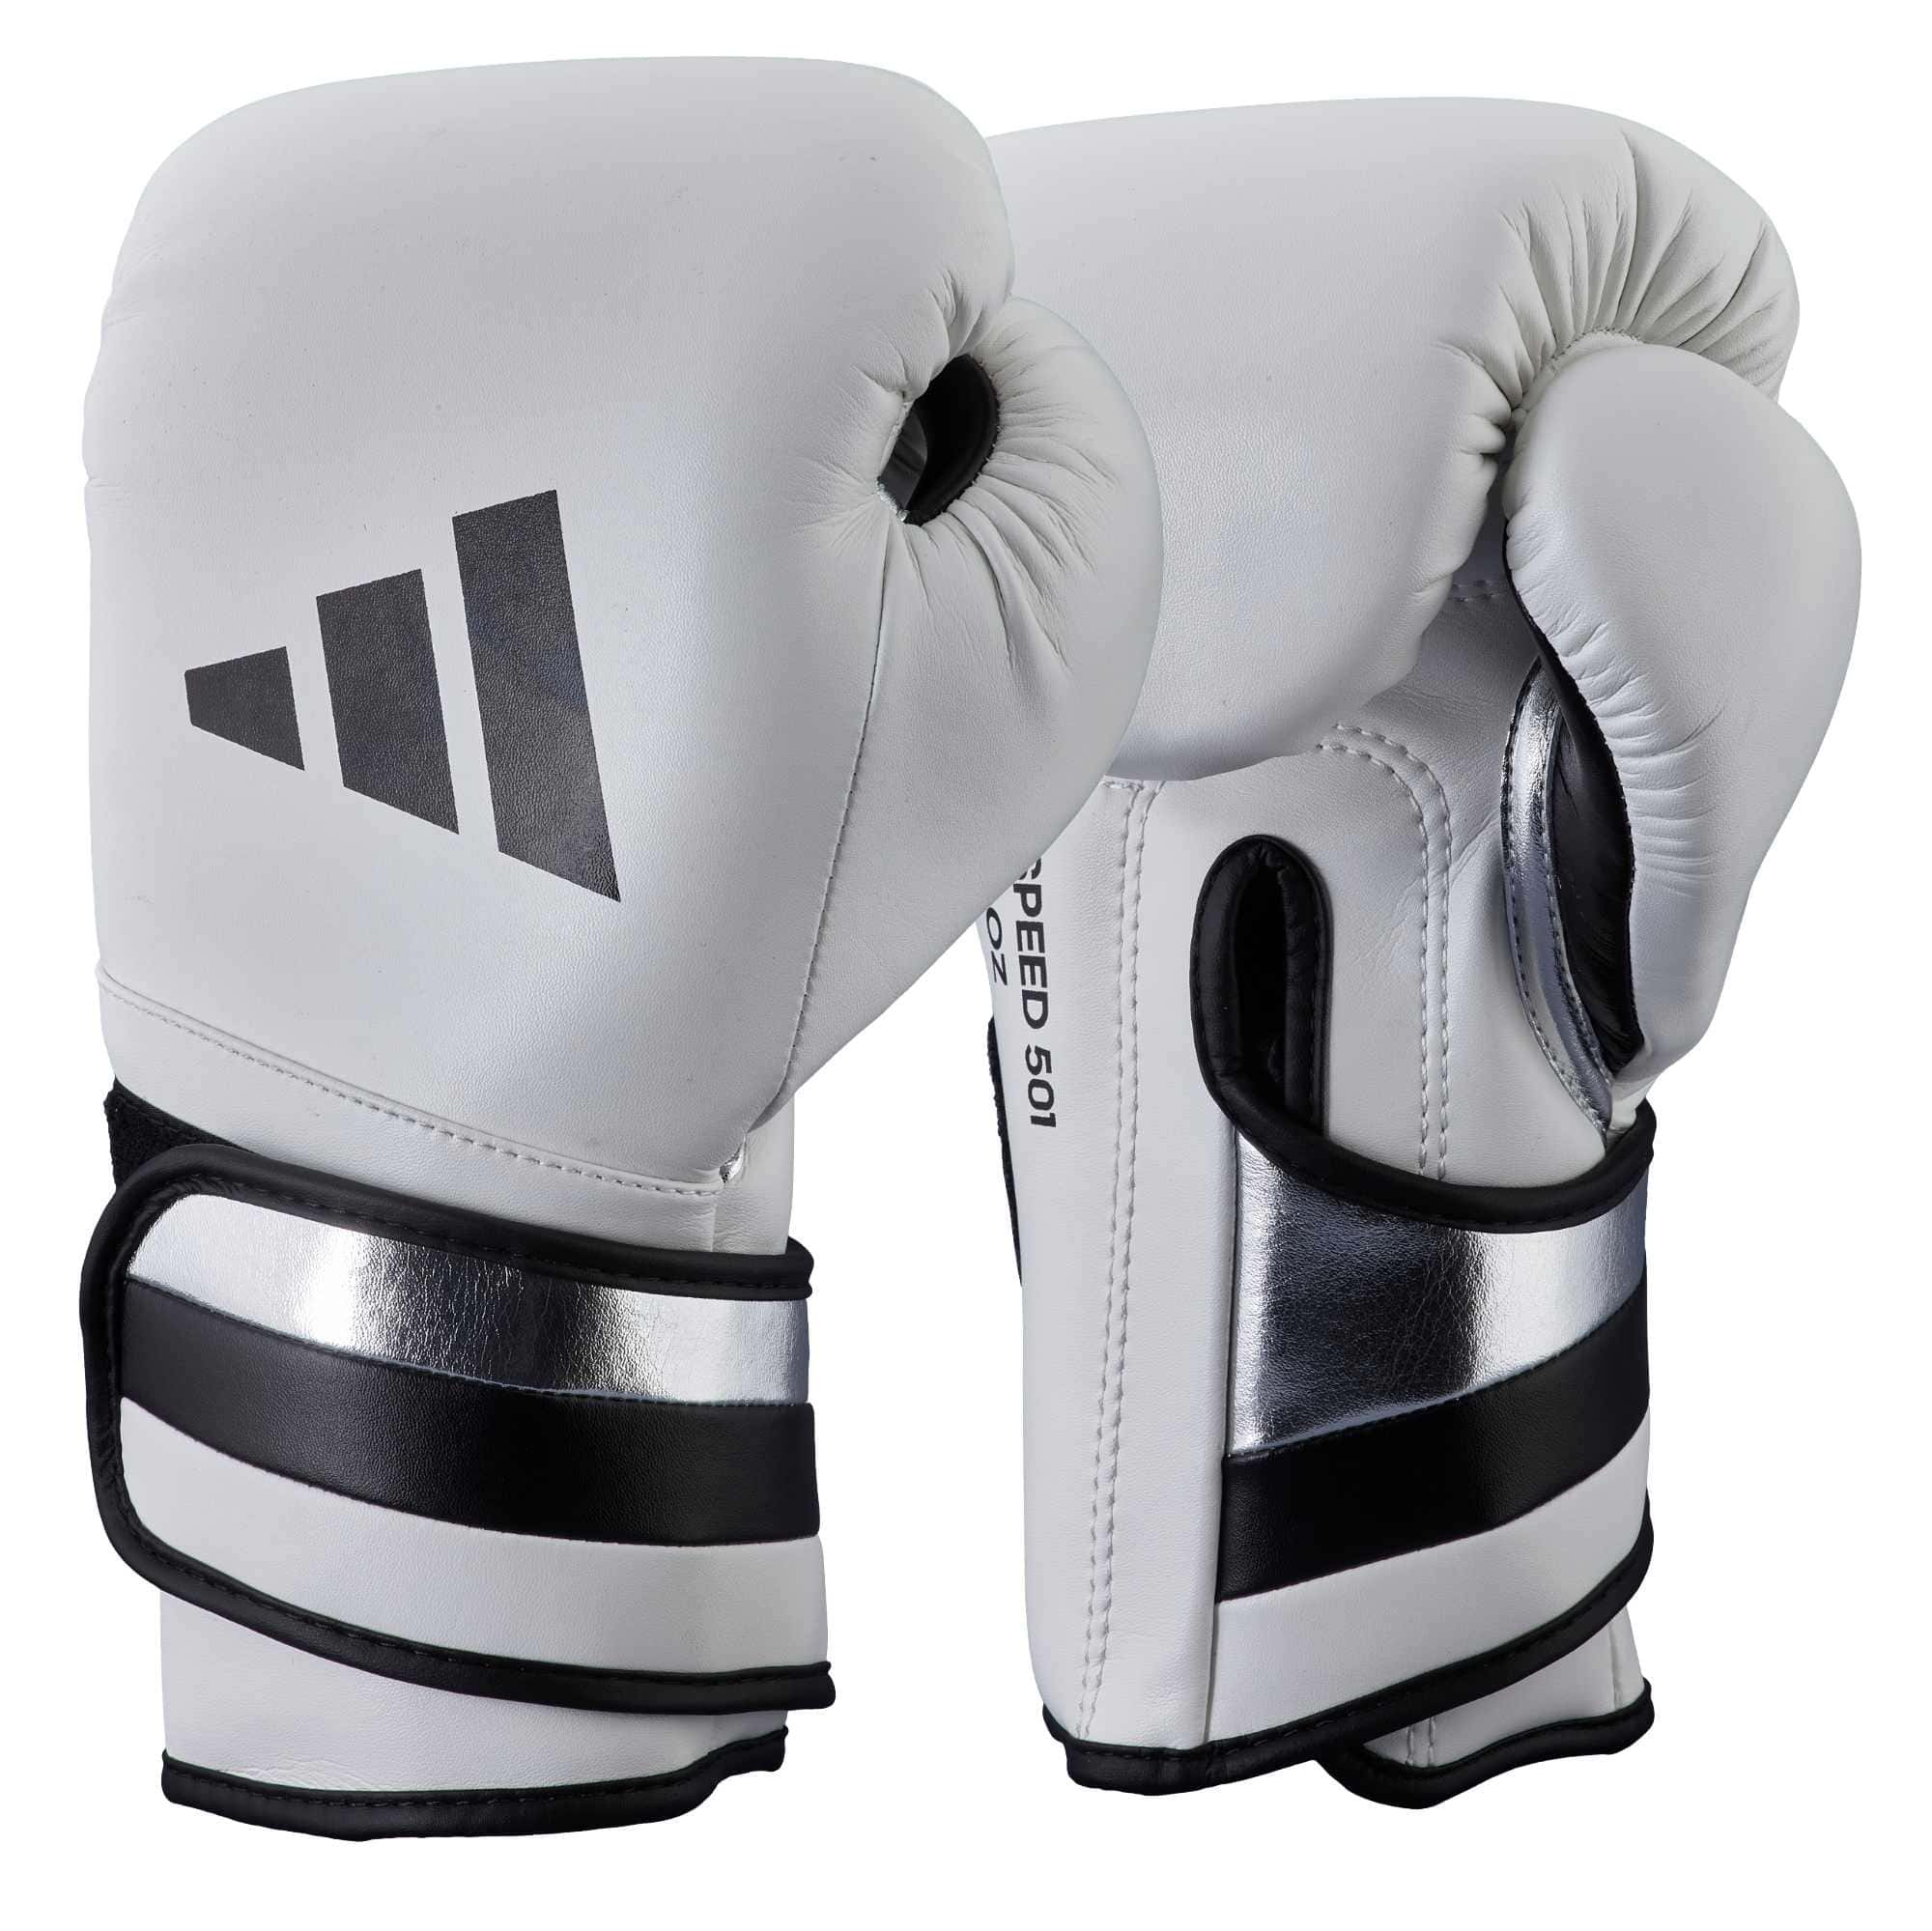 Buy ADIDAS Boxing Gloves SPEED 500 White/Black Online ✓ - emparor Fight Shop